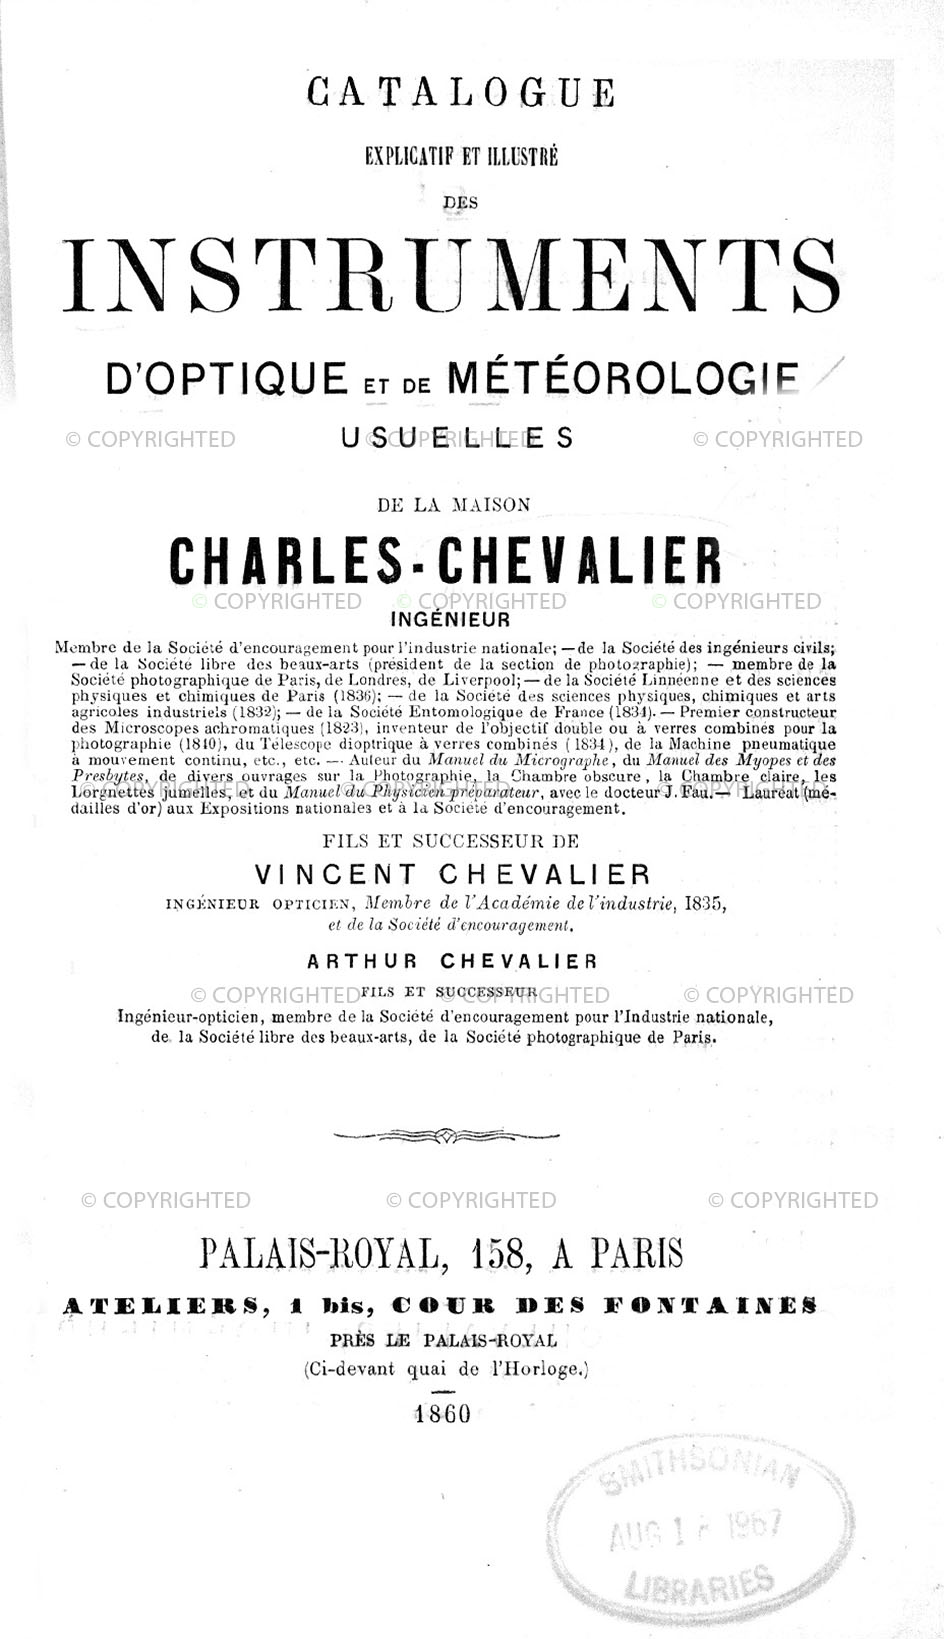 Chevalier firm